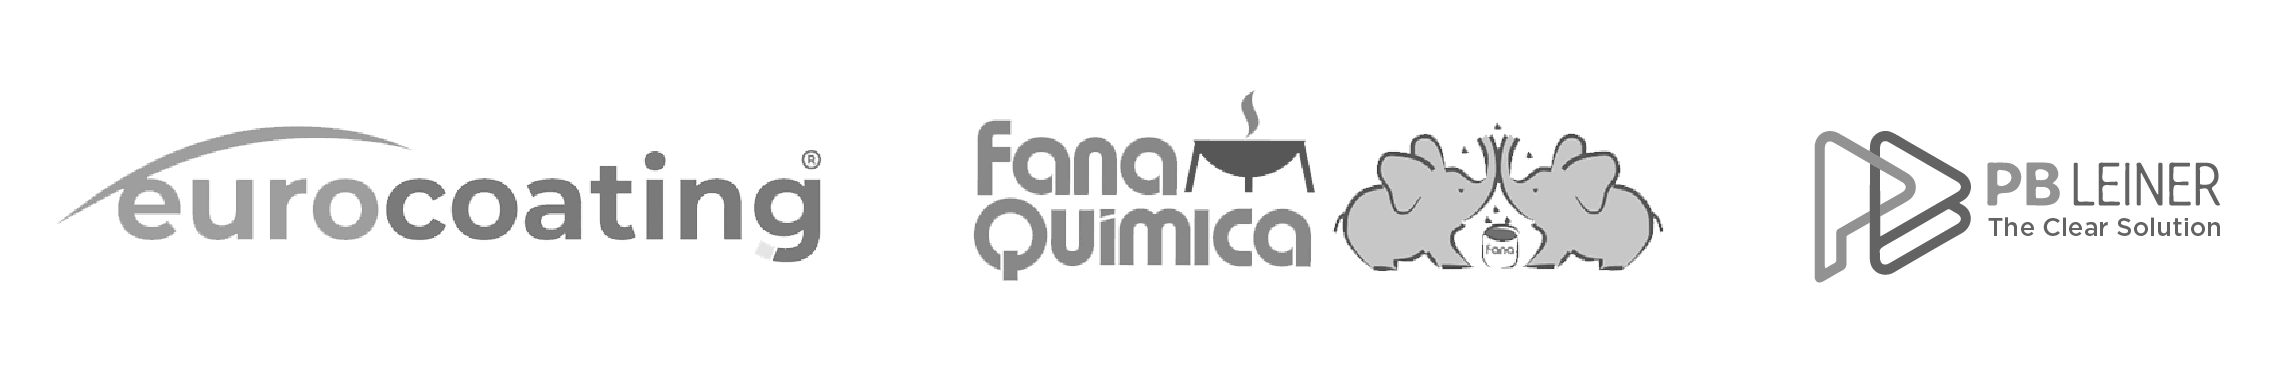 logos clientes eurocoating, Fana Quimica, PB Leiner